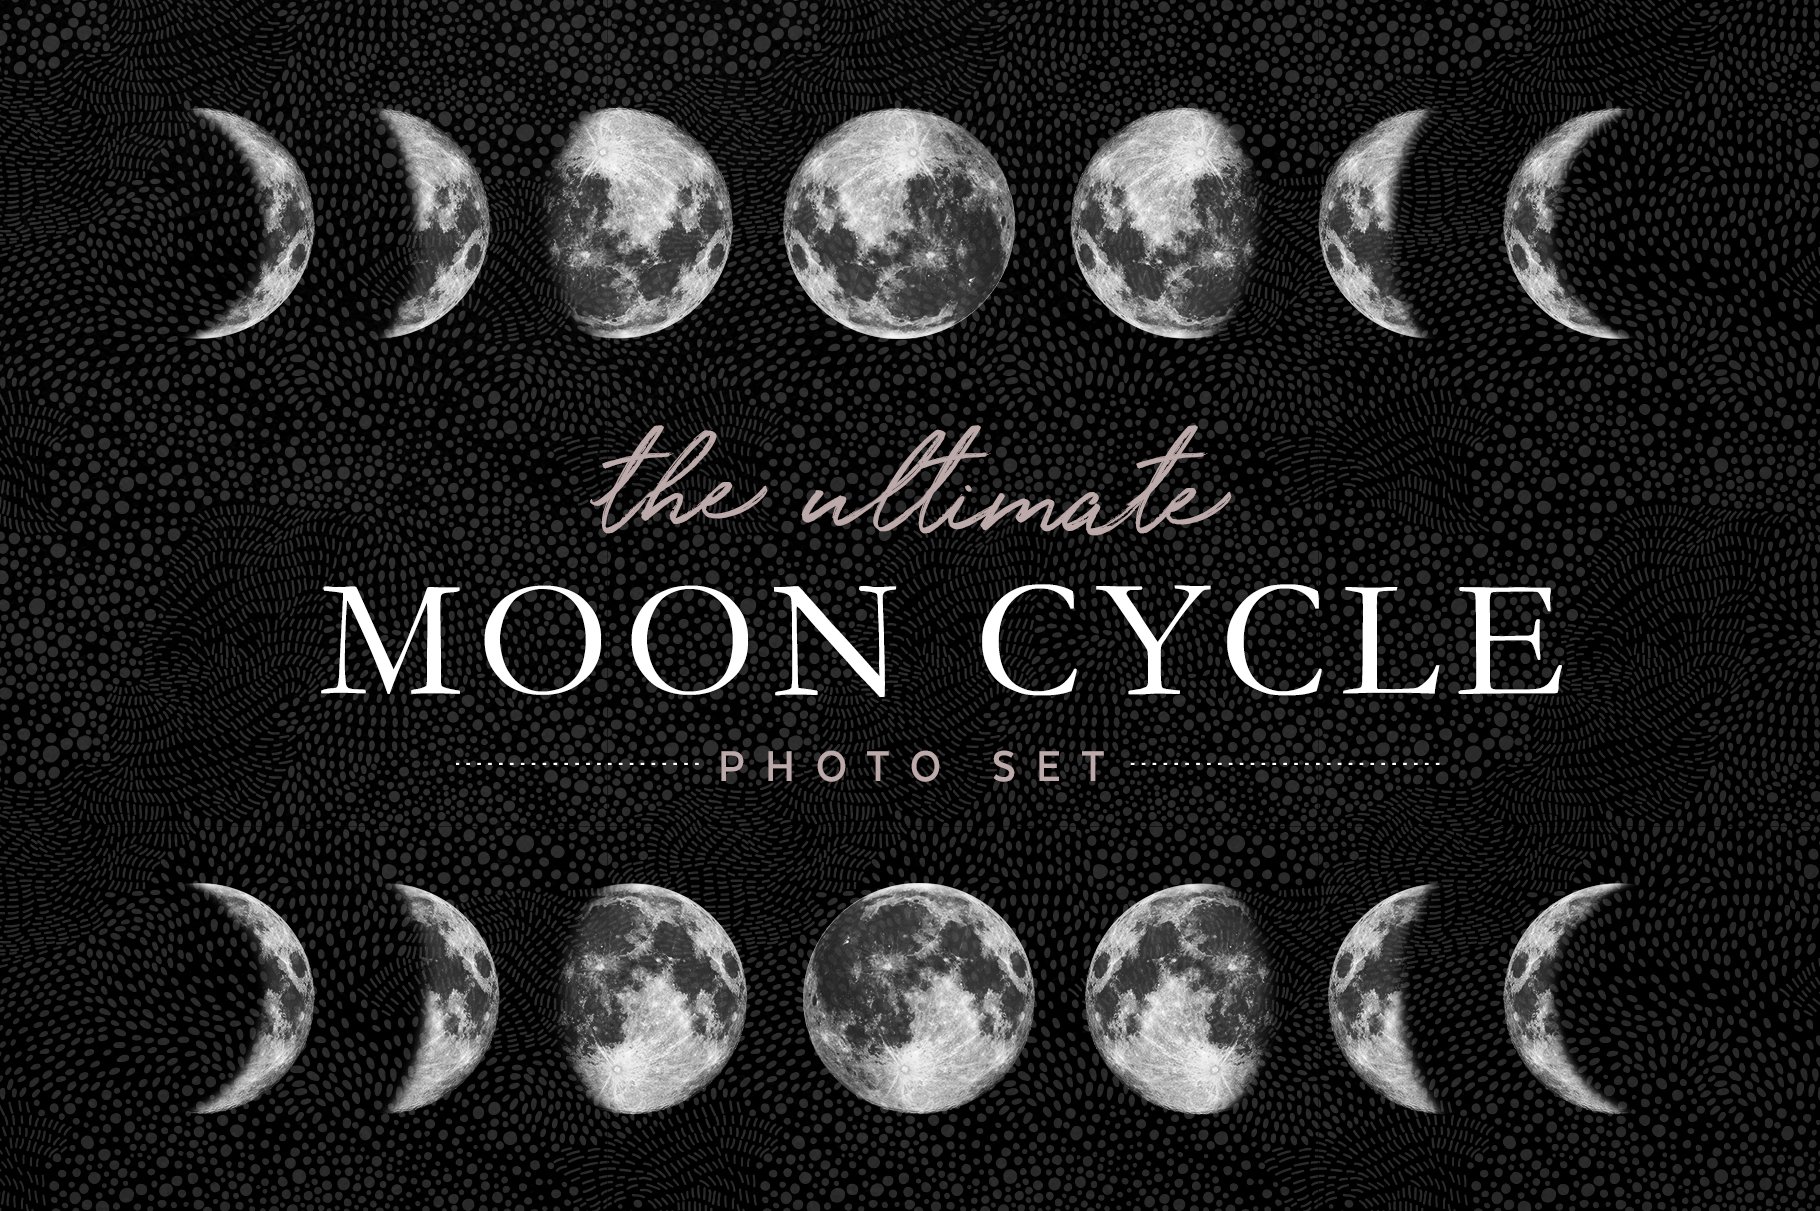 Moon Cycle Photo Set cover image.